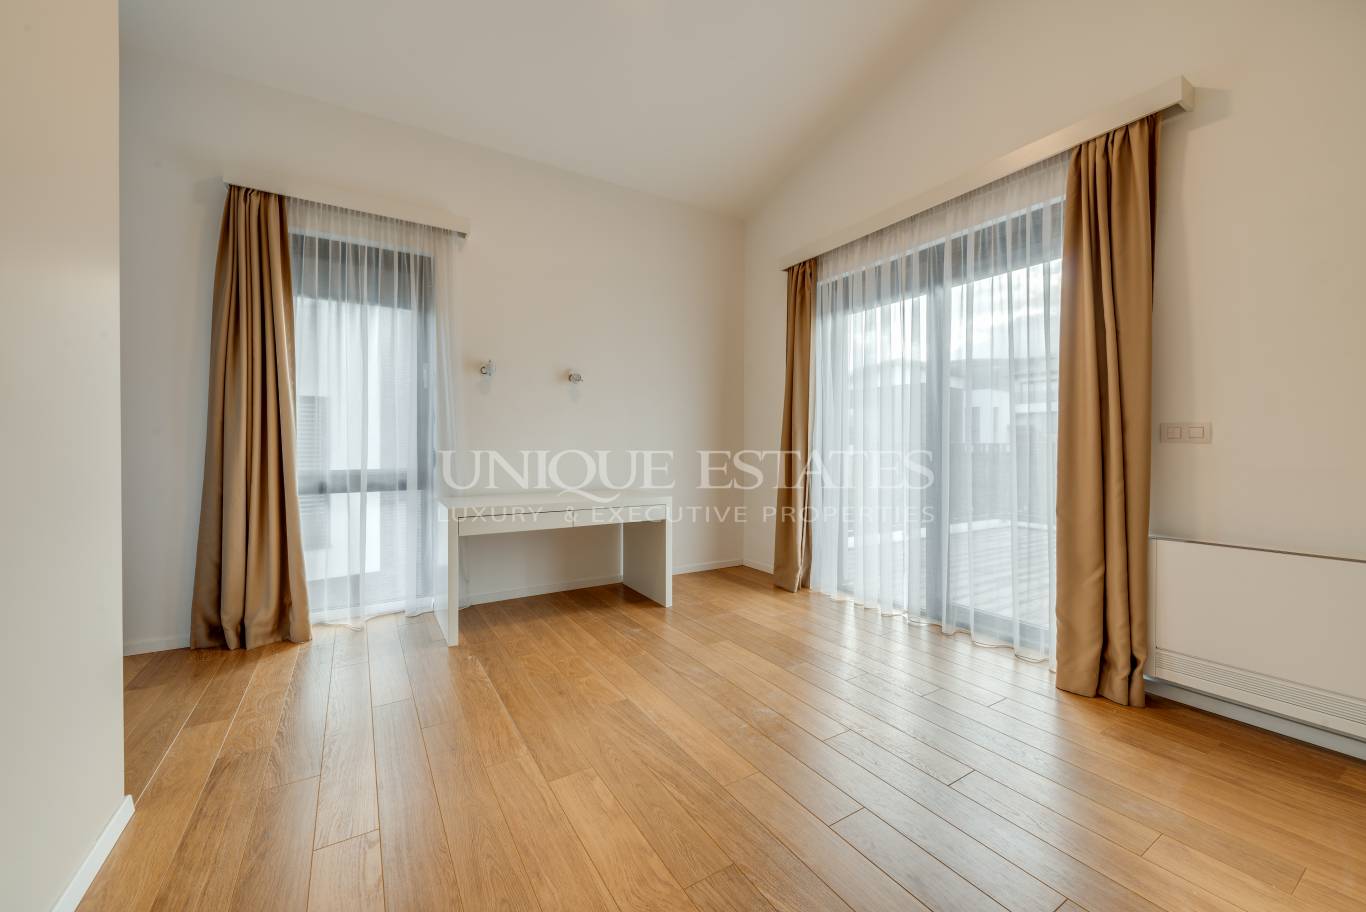 House for rent in Sofia, Malinova dolina va with listing ID: K14506 - image 13